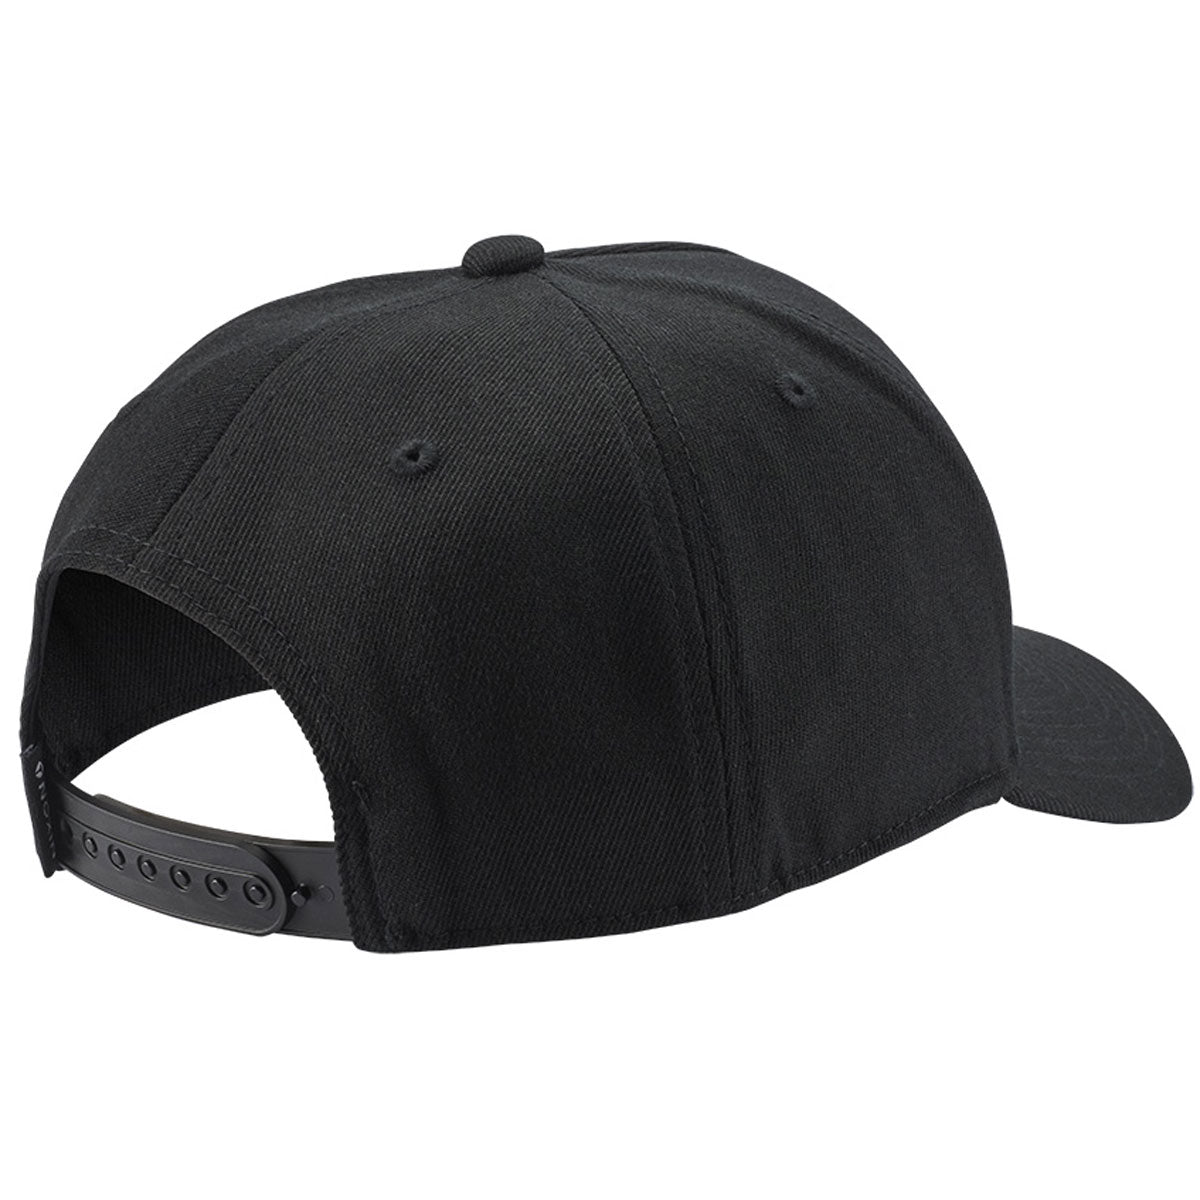 Nixon Deep Down Athletic Snapback Hat - All Black/Black image 2